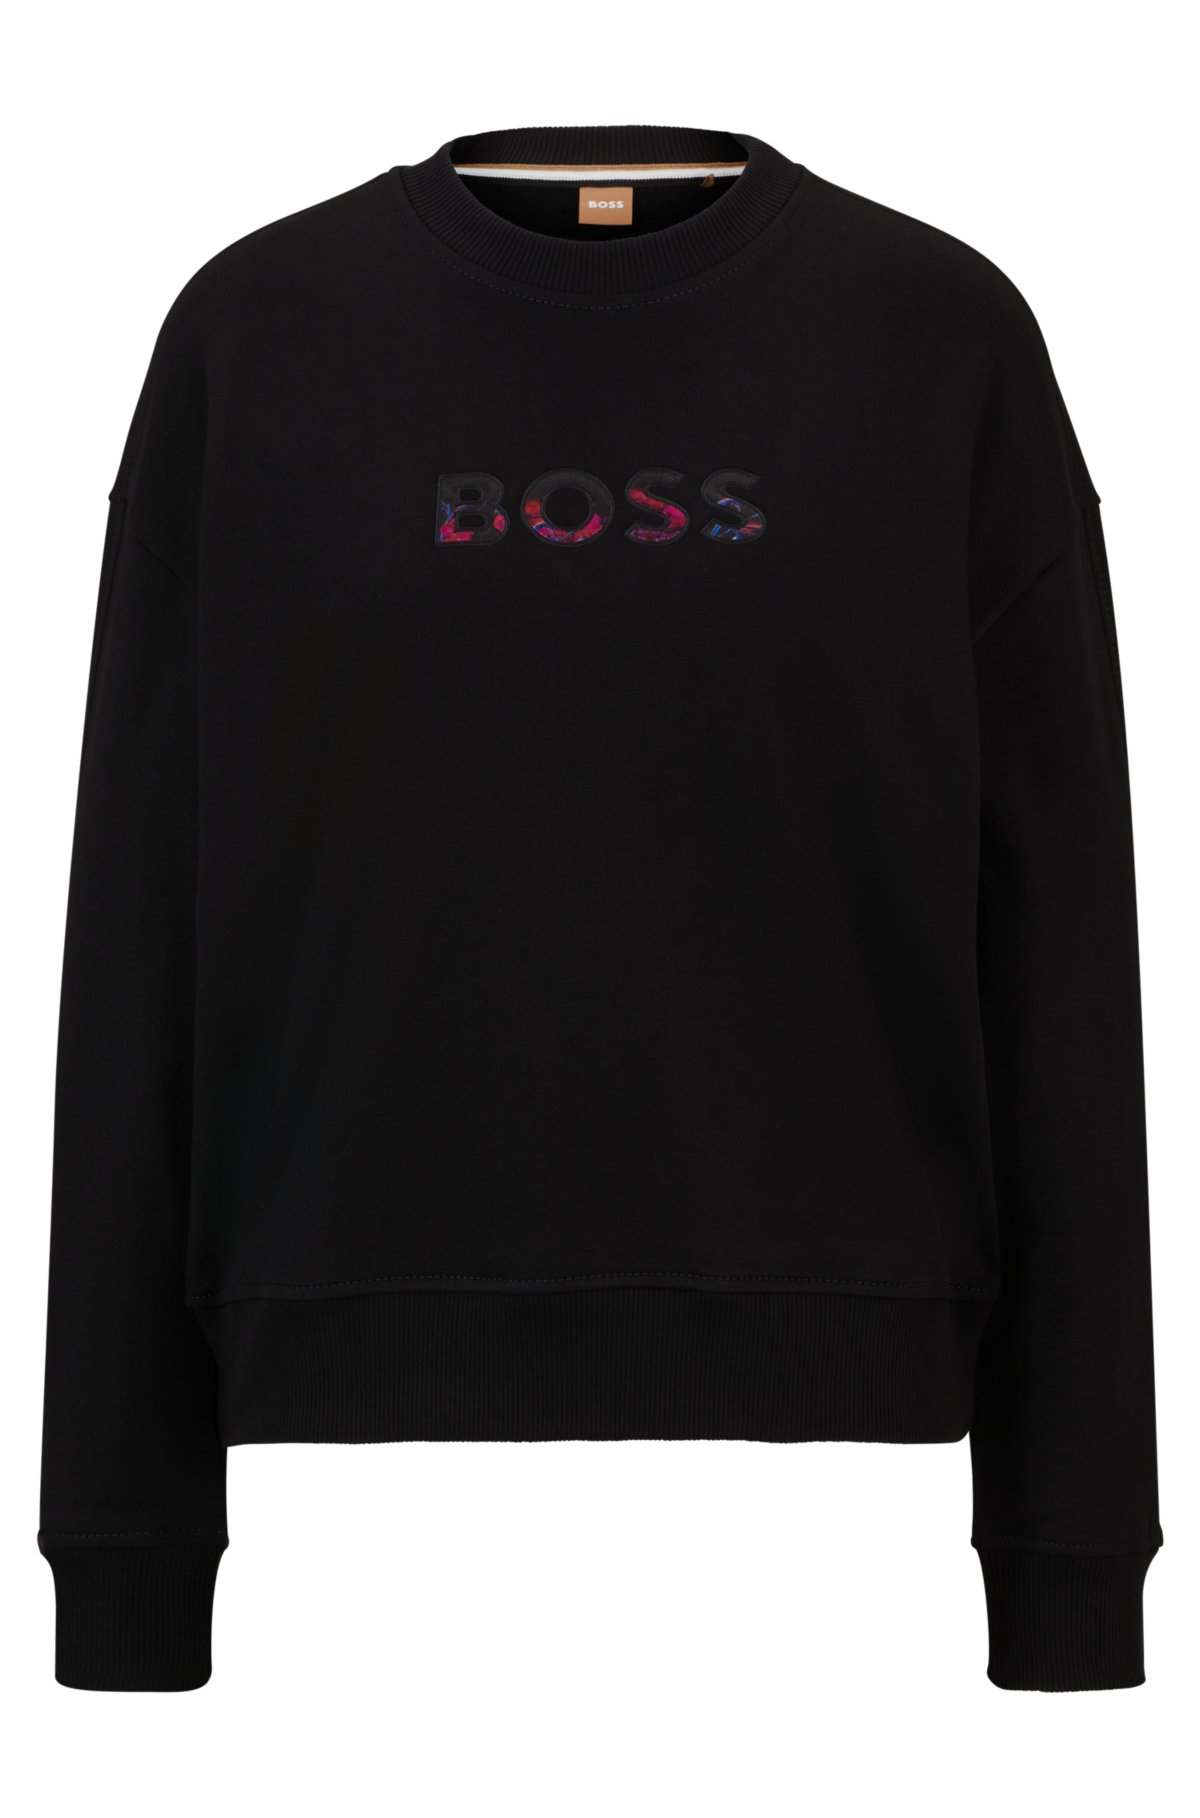 BOSS - リラックスフィット コットンブレンド スウェットシャツ ロゴ